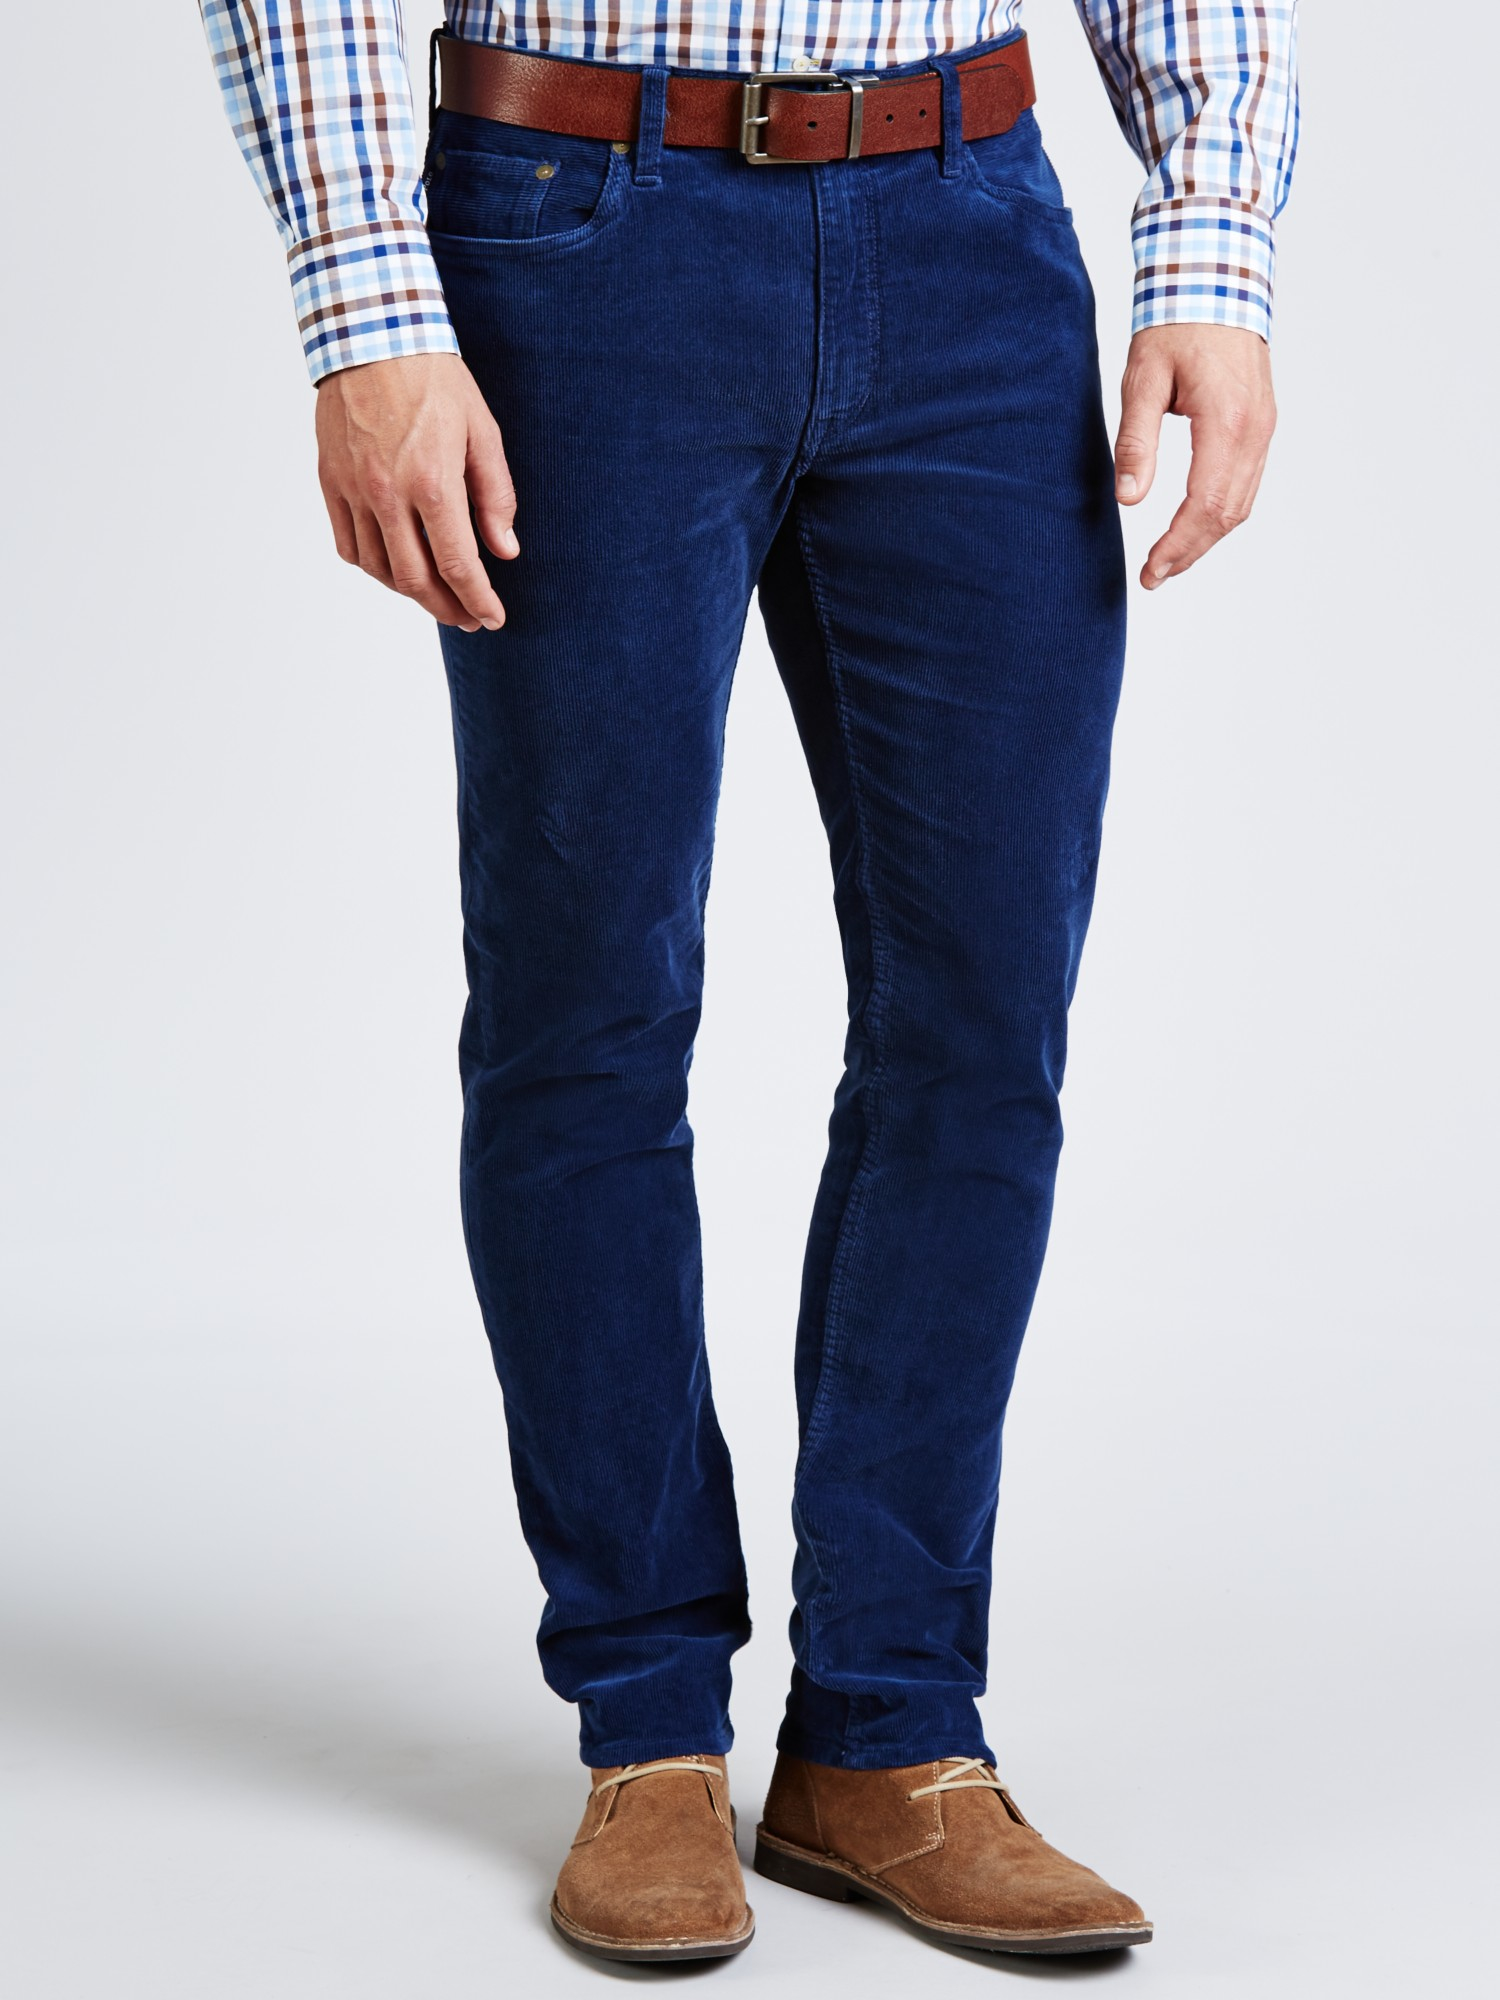 Polo Ralph Lauren Varick Slim Fit Corduroy Trousers in Blue for Men - Lyst